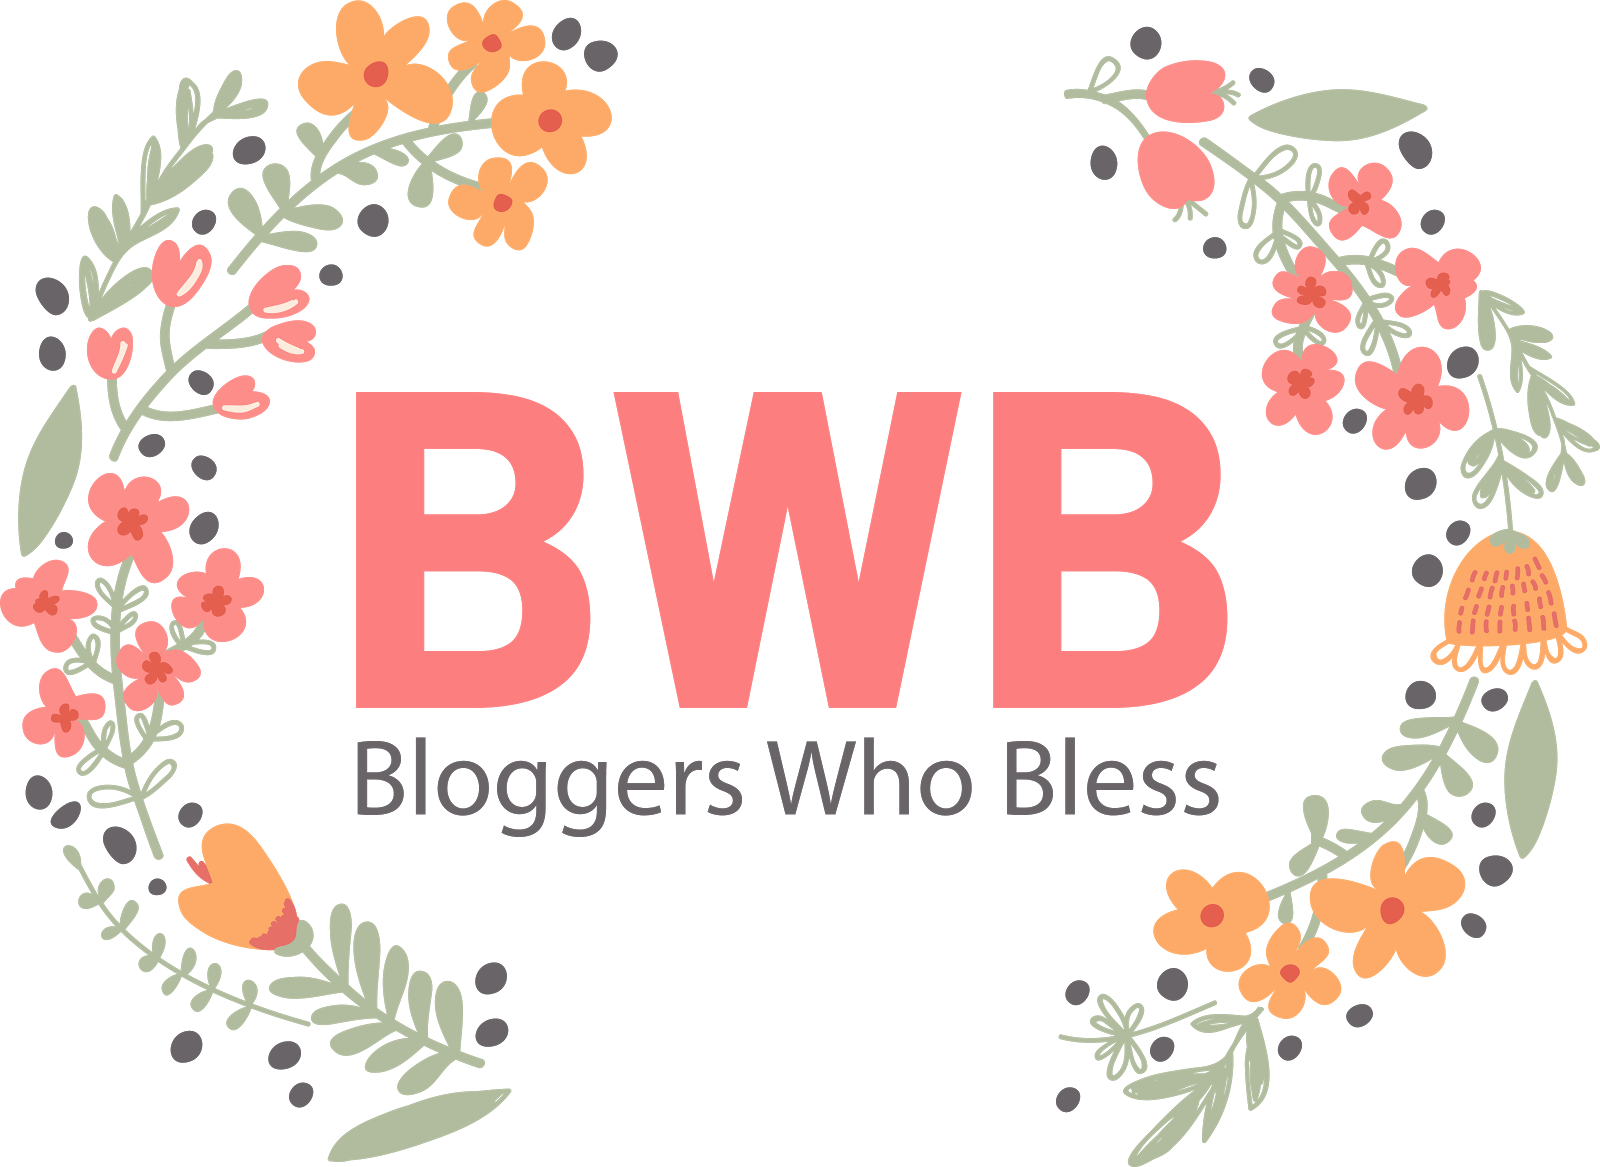 #BloggersWhoBless